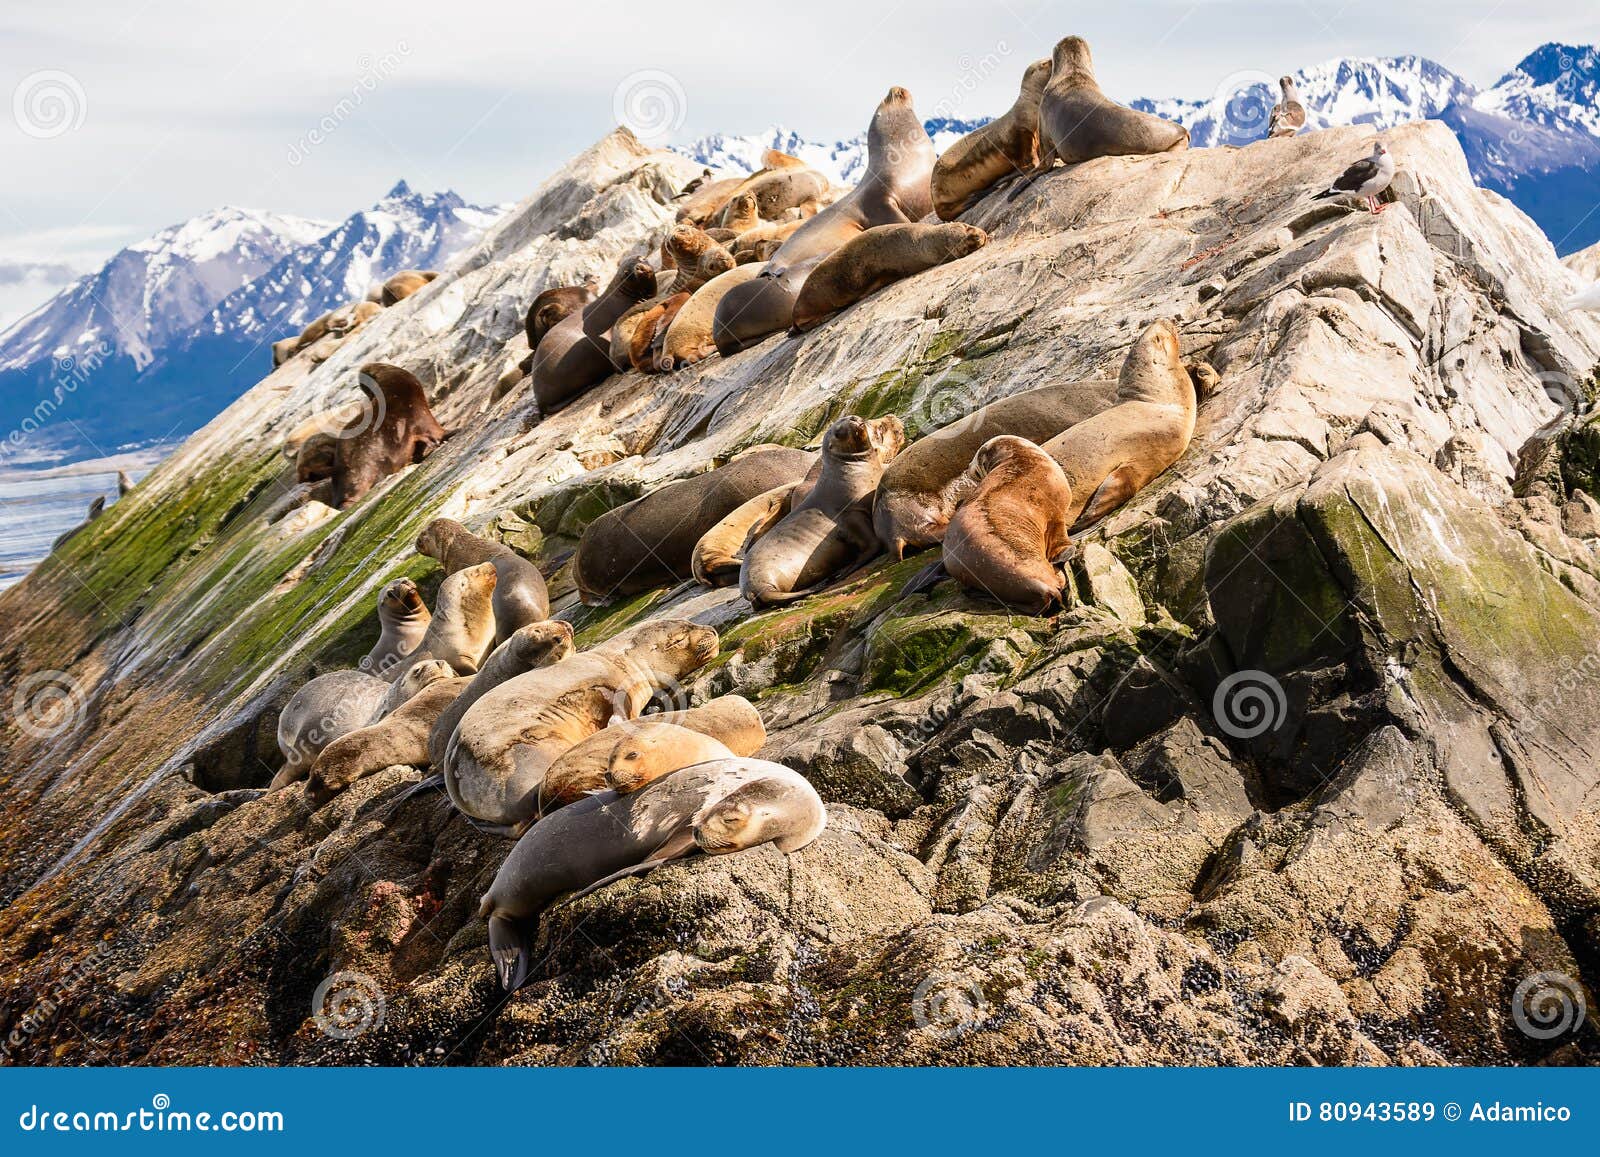 sea lions on isla in beagle channel near ushuaia argentina